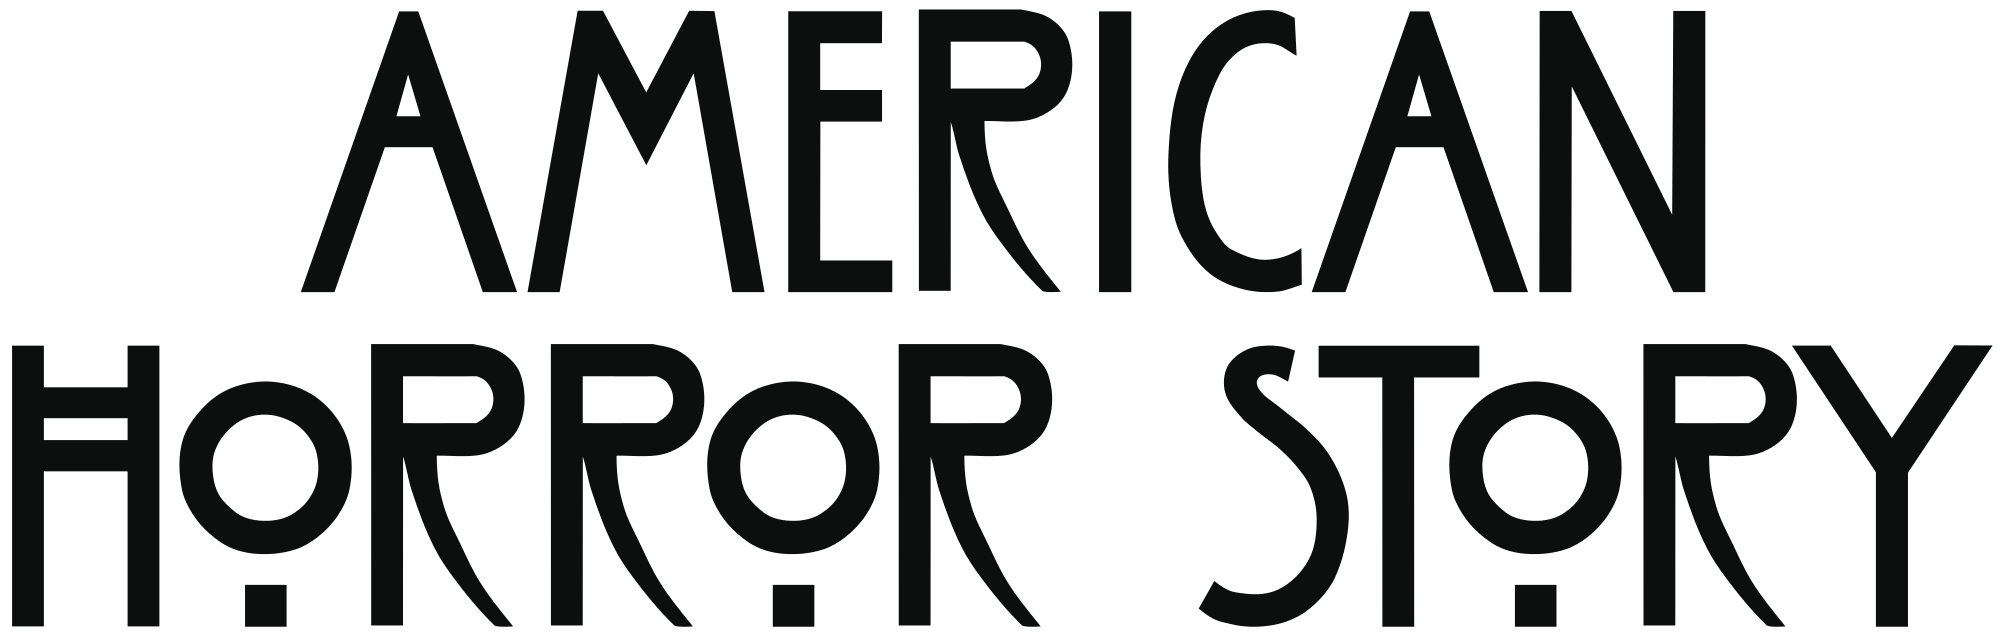 American Horror Story Logo - American Horror Story | Gagapedia | FANDOM powered by Wikia